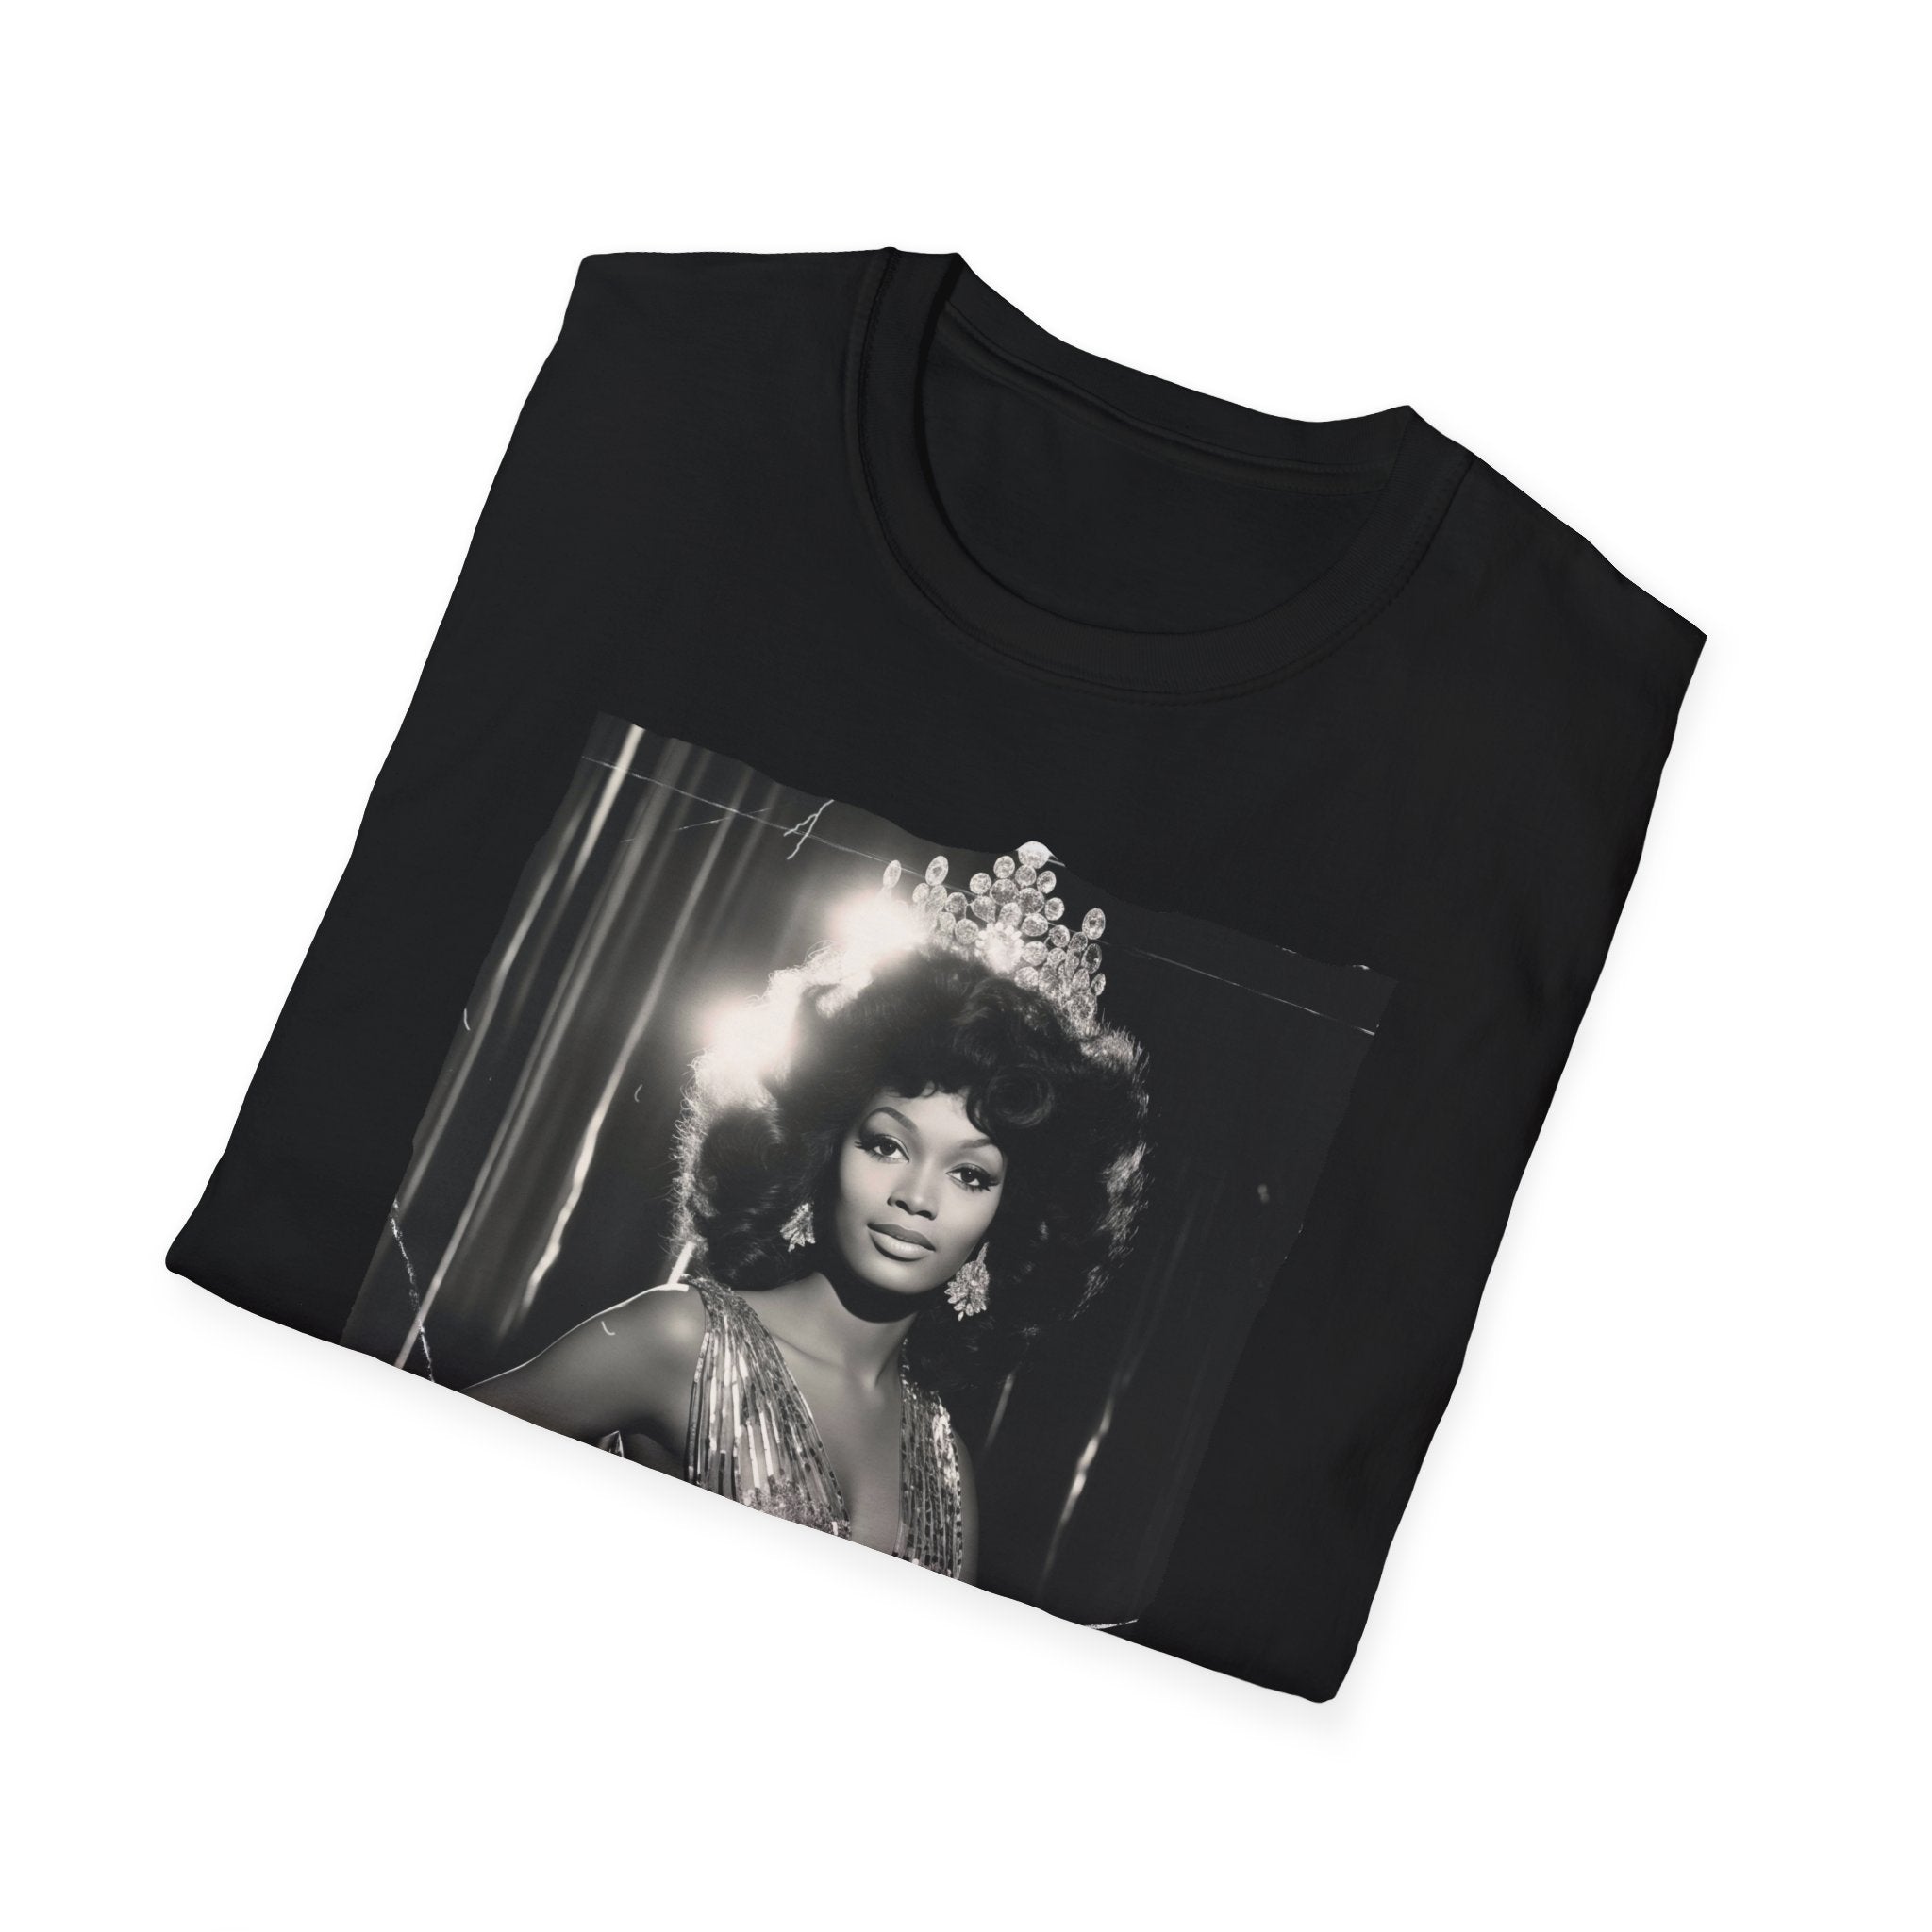 Black Beauty Queen Softstyle T-Shirt